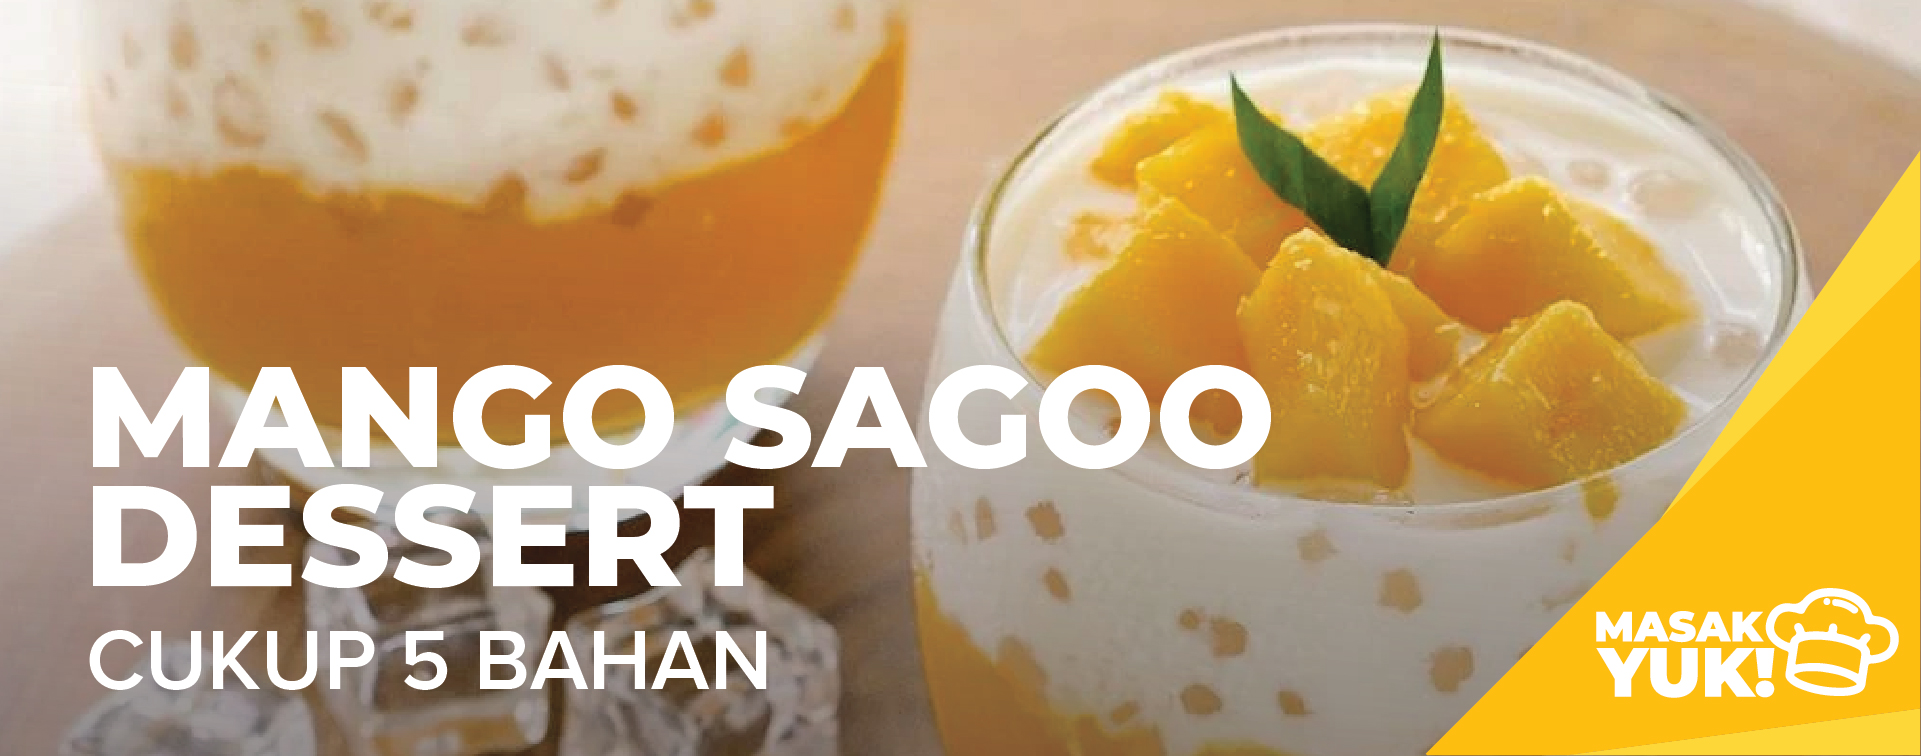 Resep Mango Sago Dessert